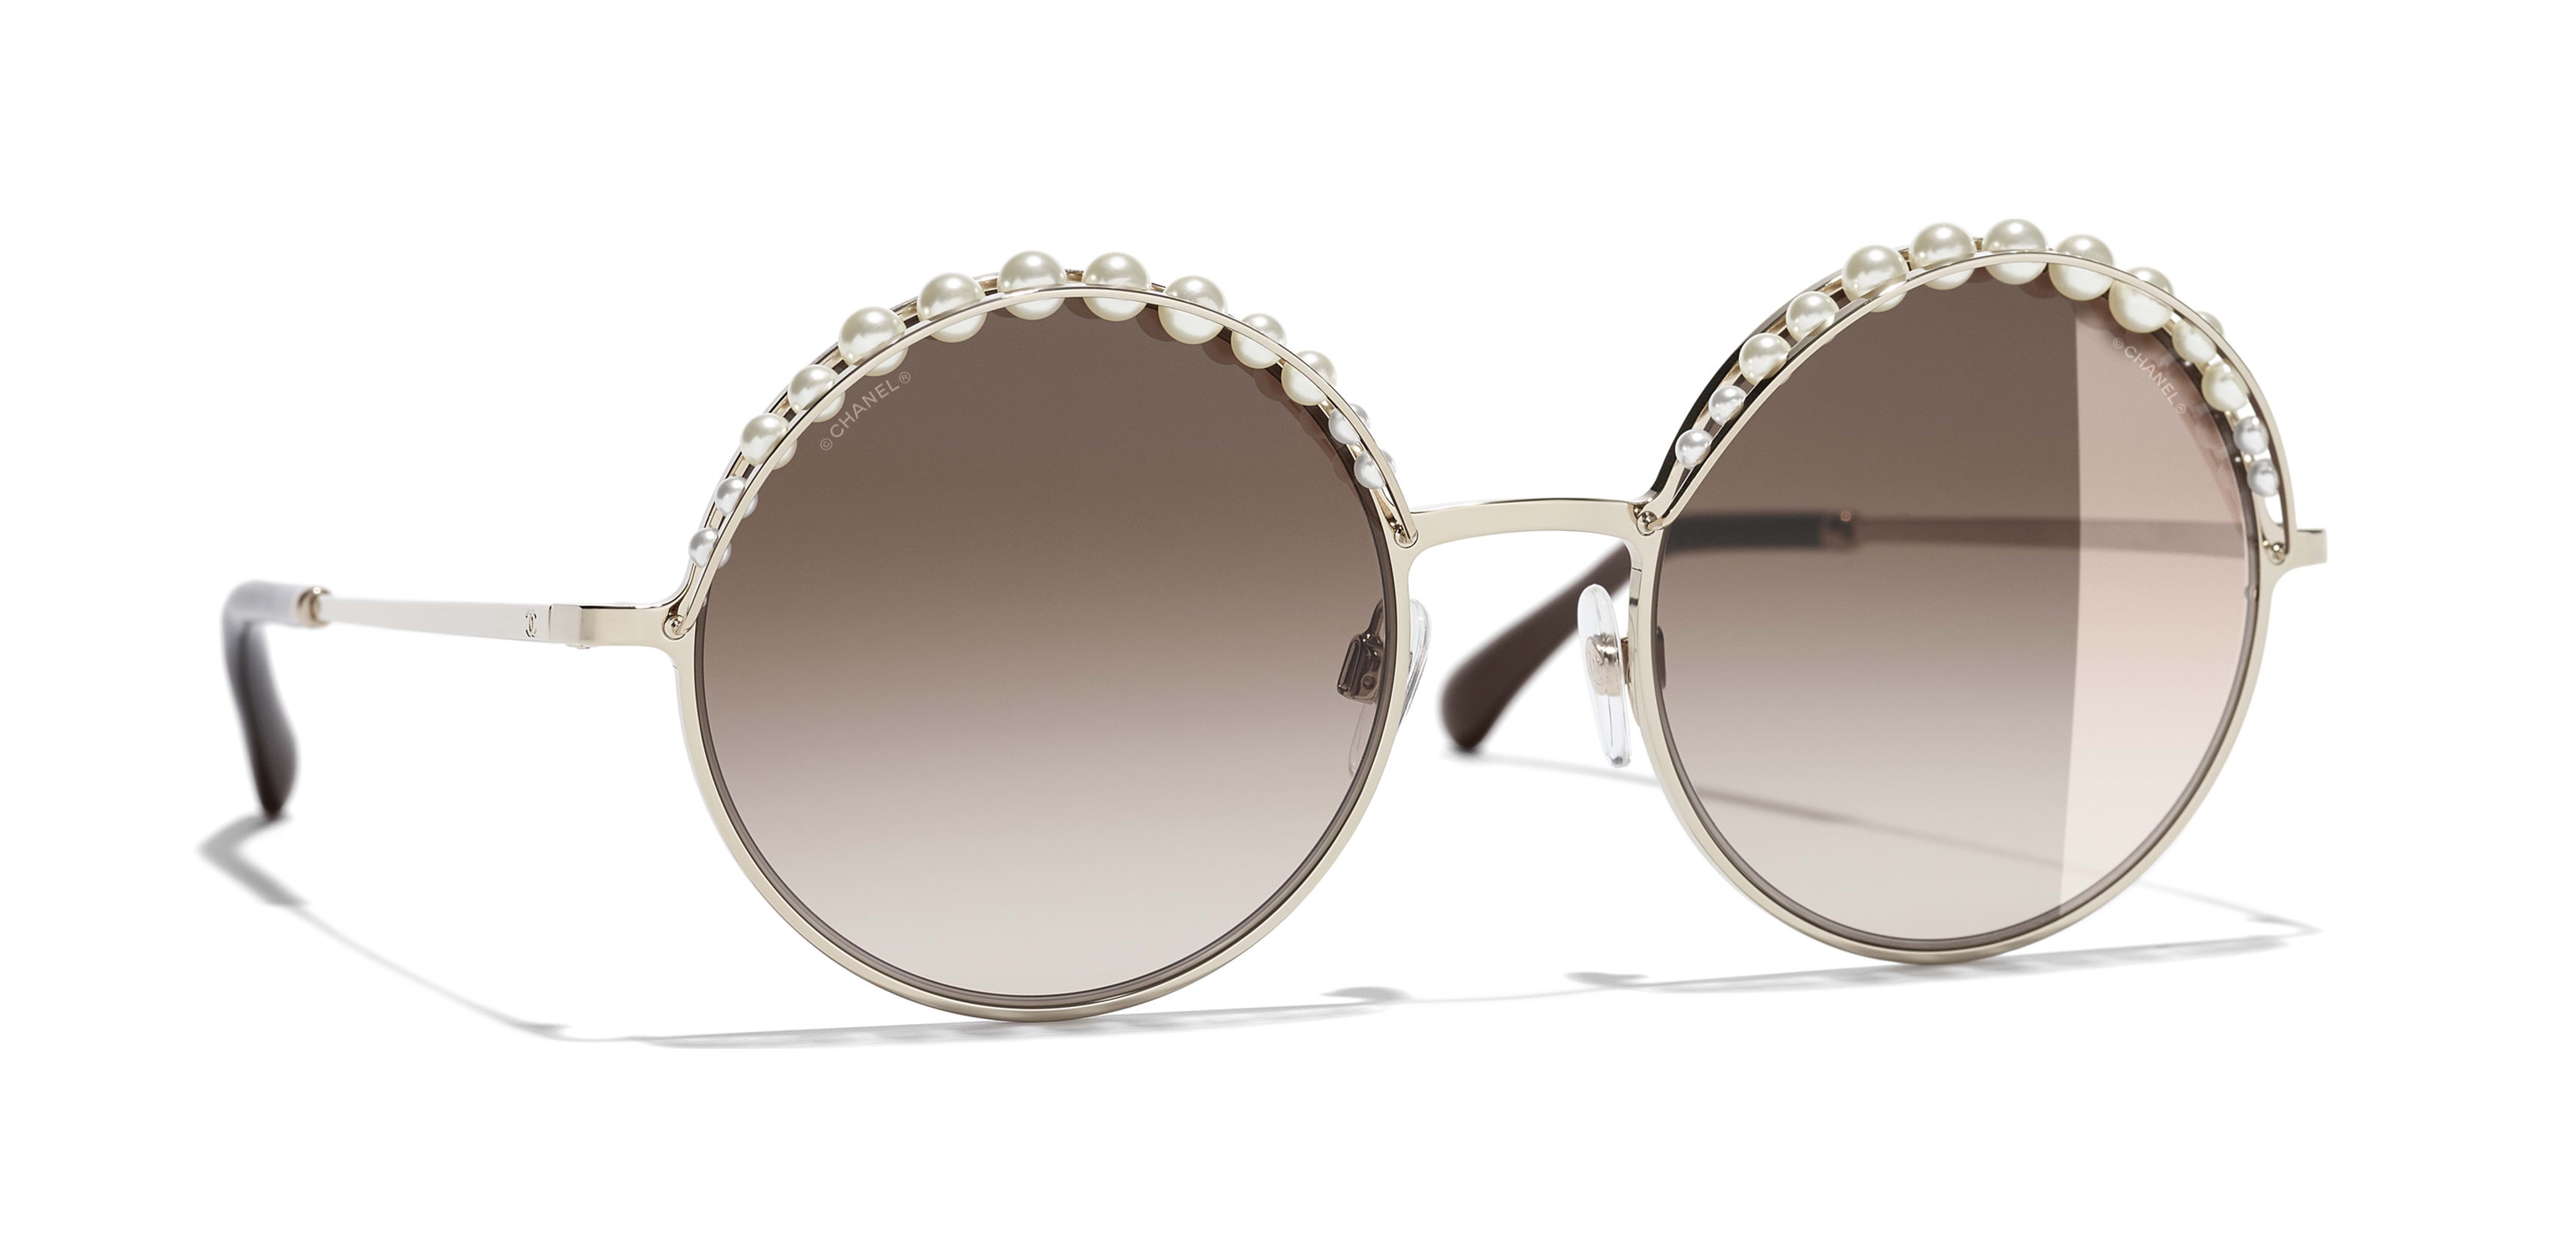 Chanel - Round Sunglasses - Gold Light Brown - Chanel Eyewear